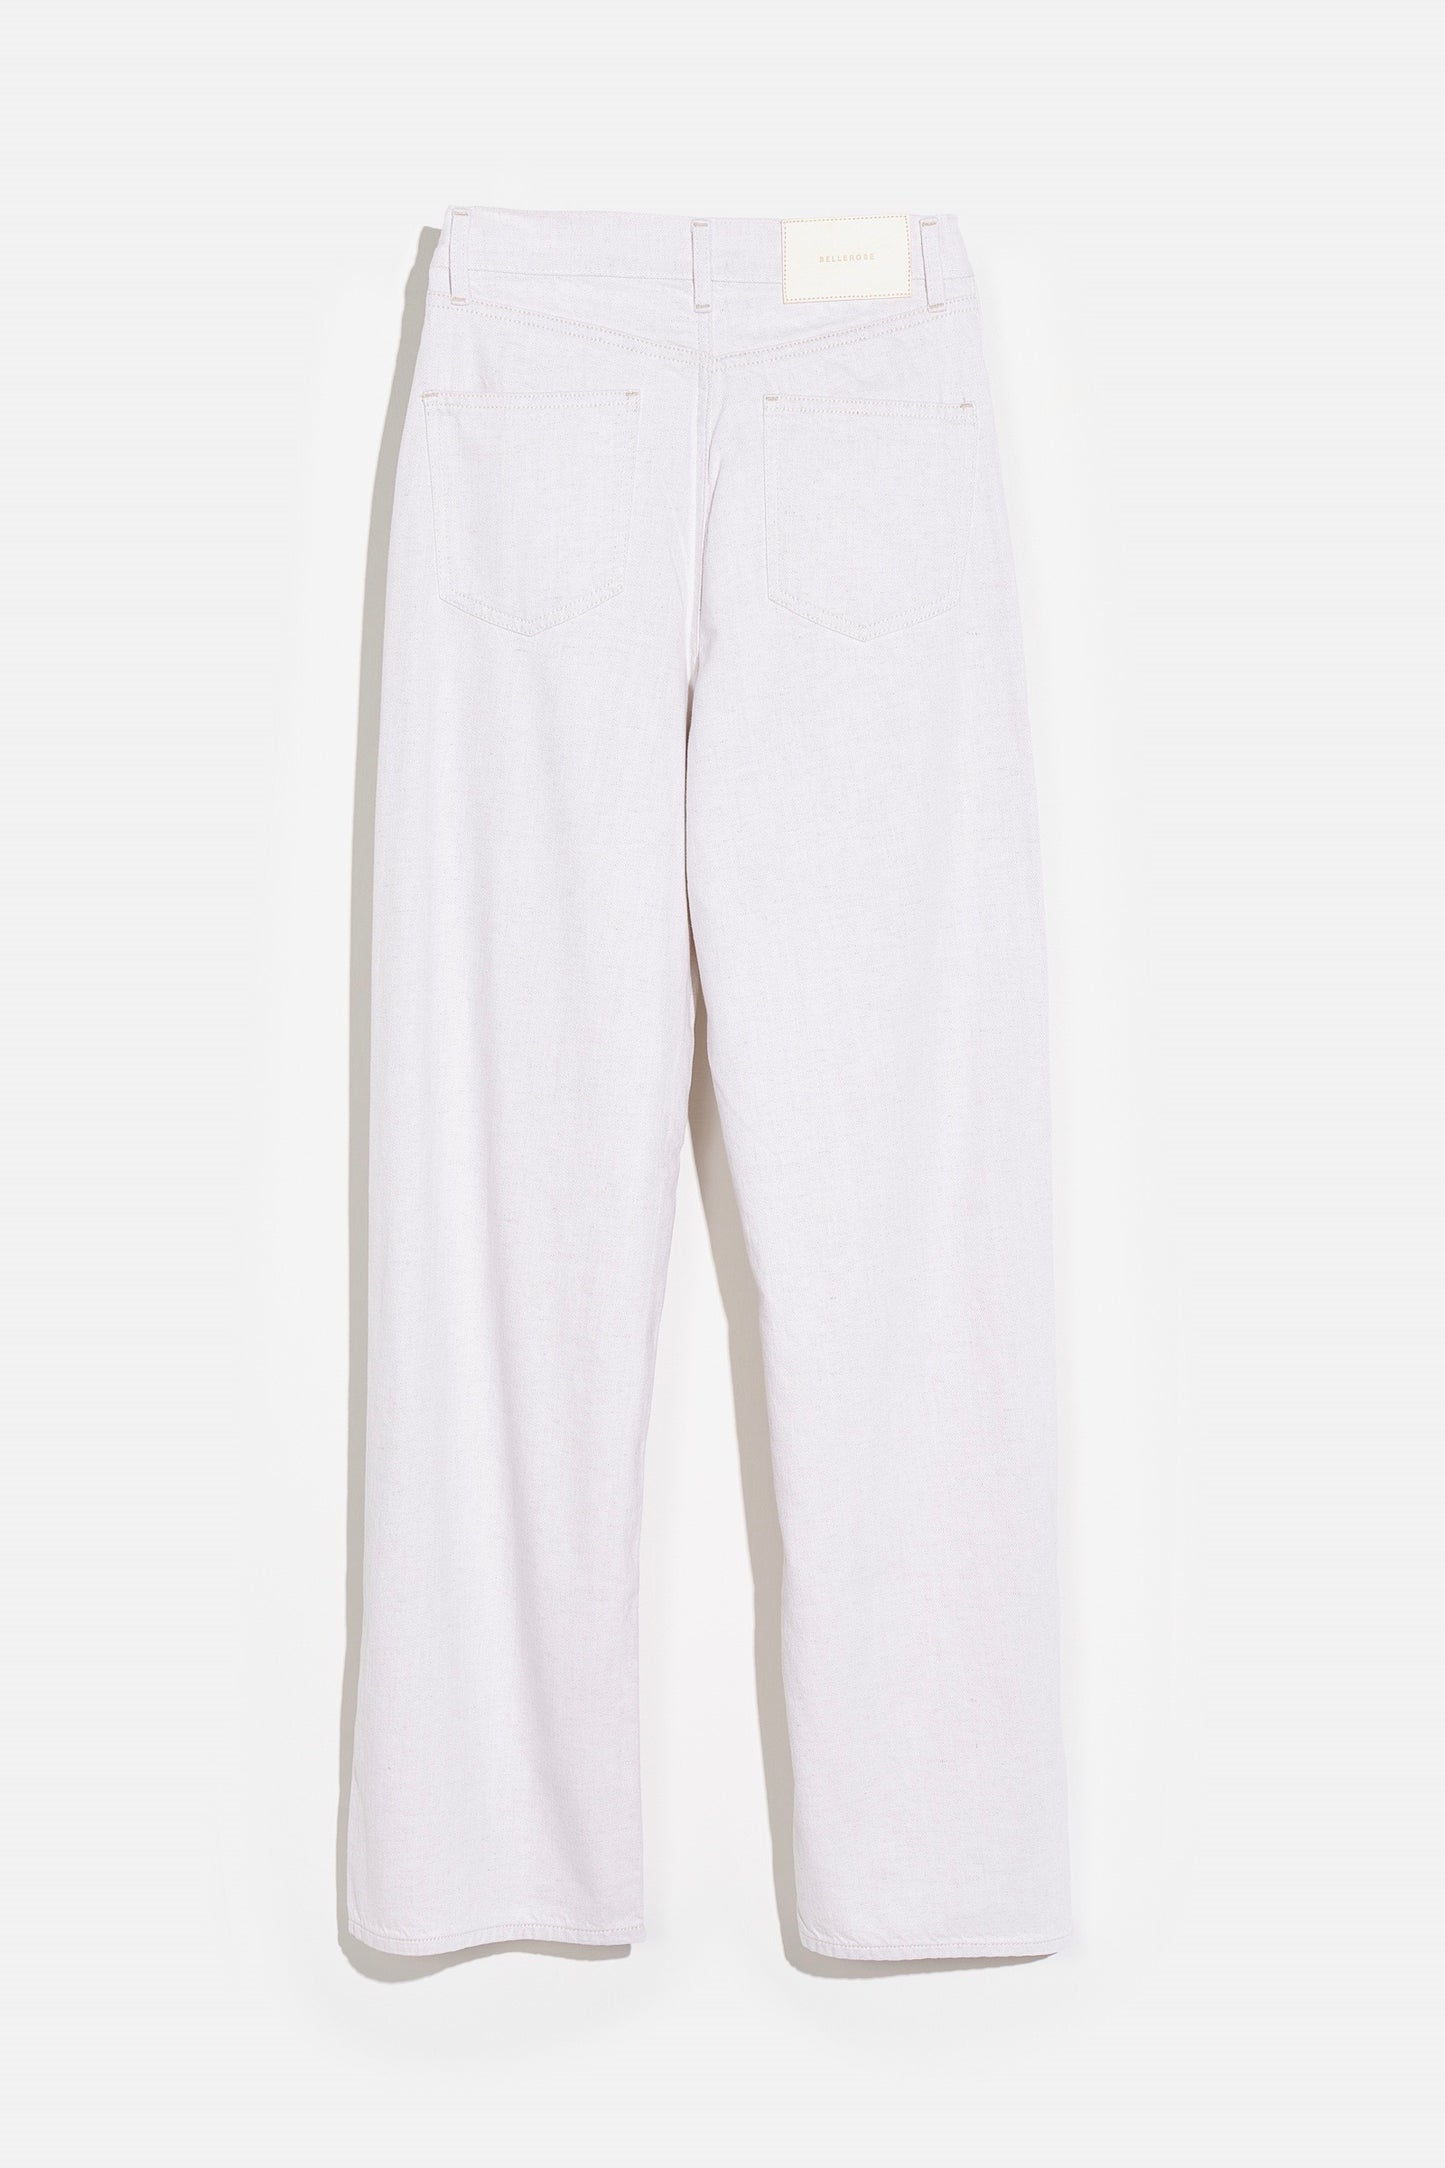 Bellerose - Parthe Jeans: Vintage White